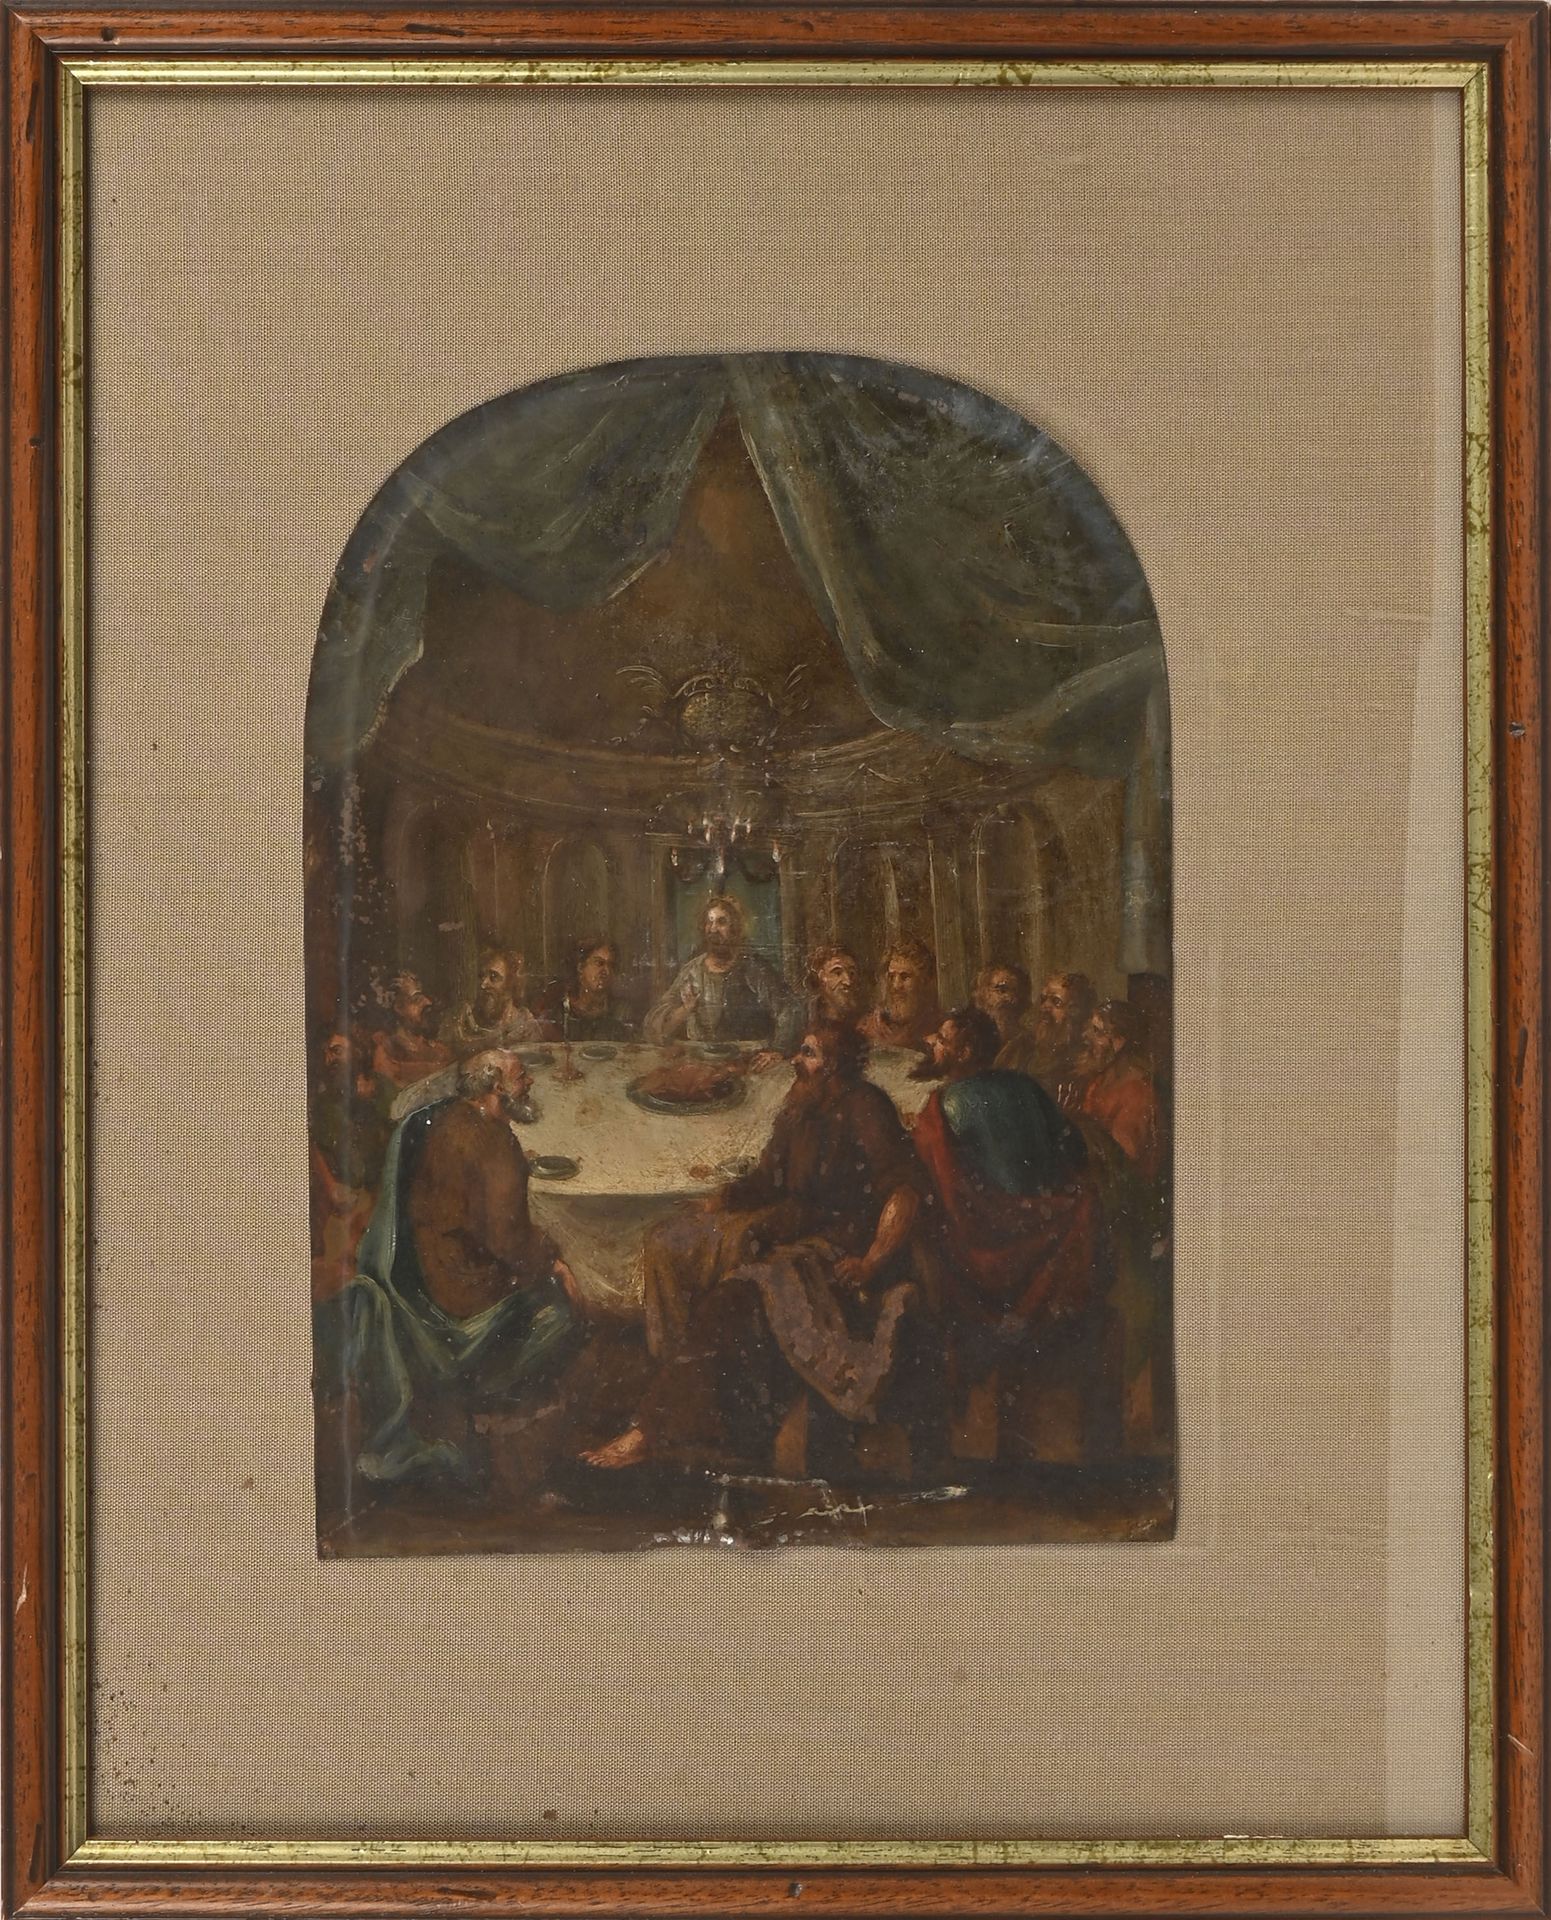 Null 18世纪早期的法国学校
最后的晚餐
上半部分为弧形铜板
21 x 15,5 cm

专家：René MILLET